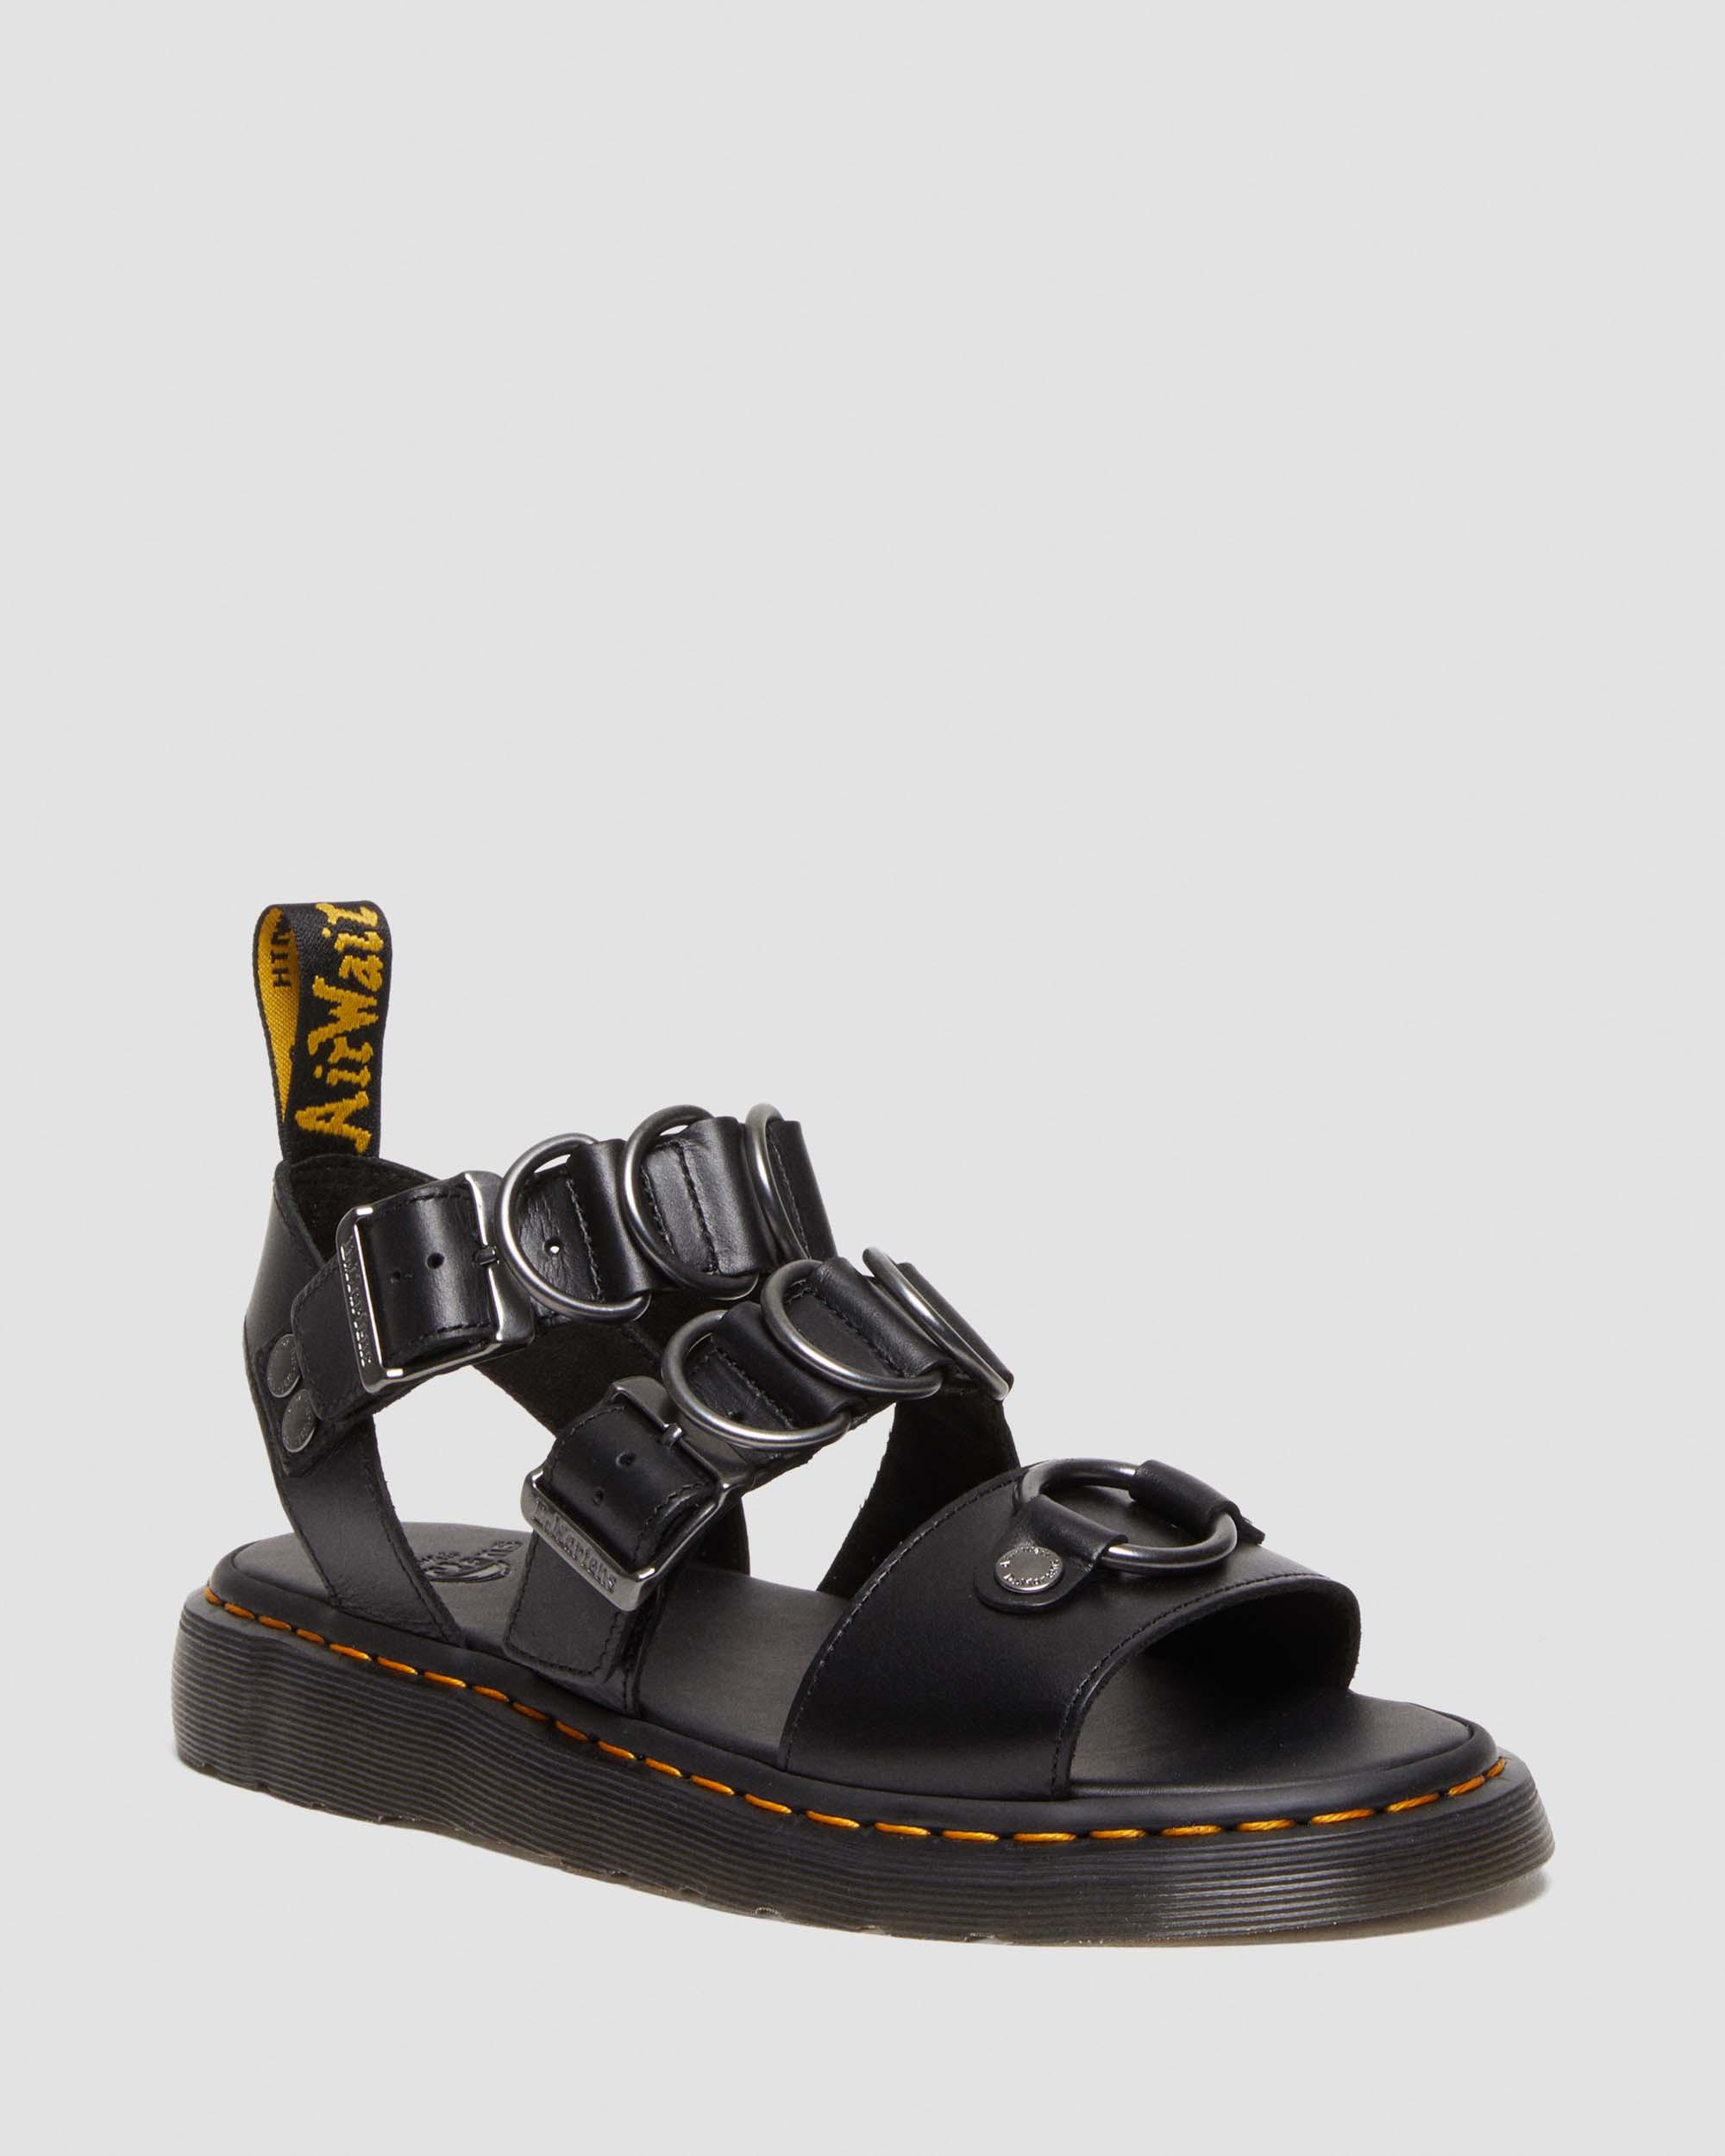 Gryphon Alternative Brando Leather Strap Sandals